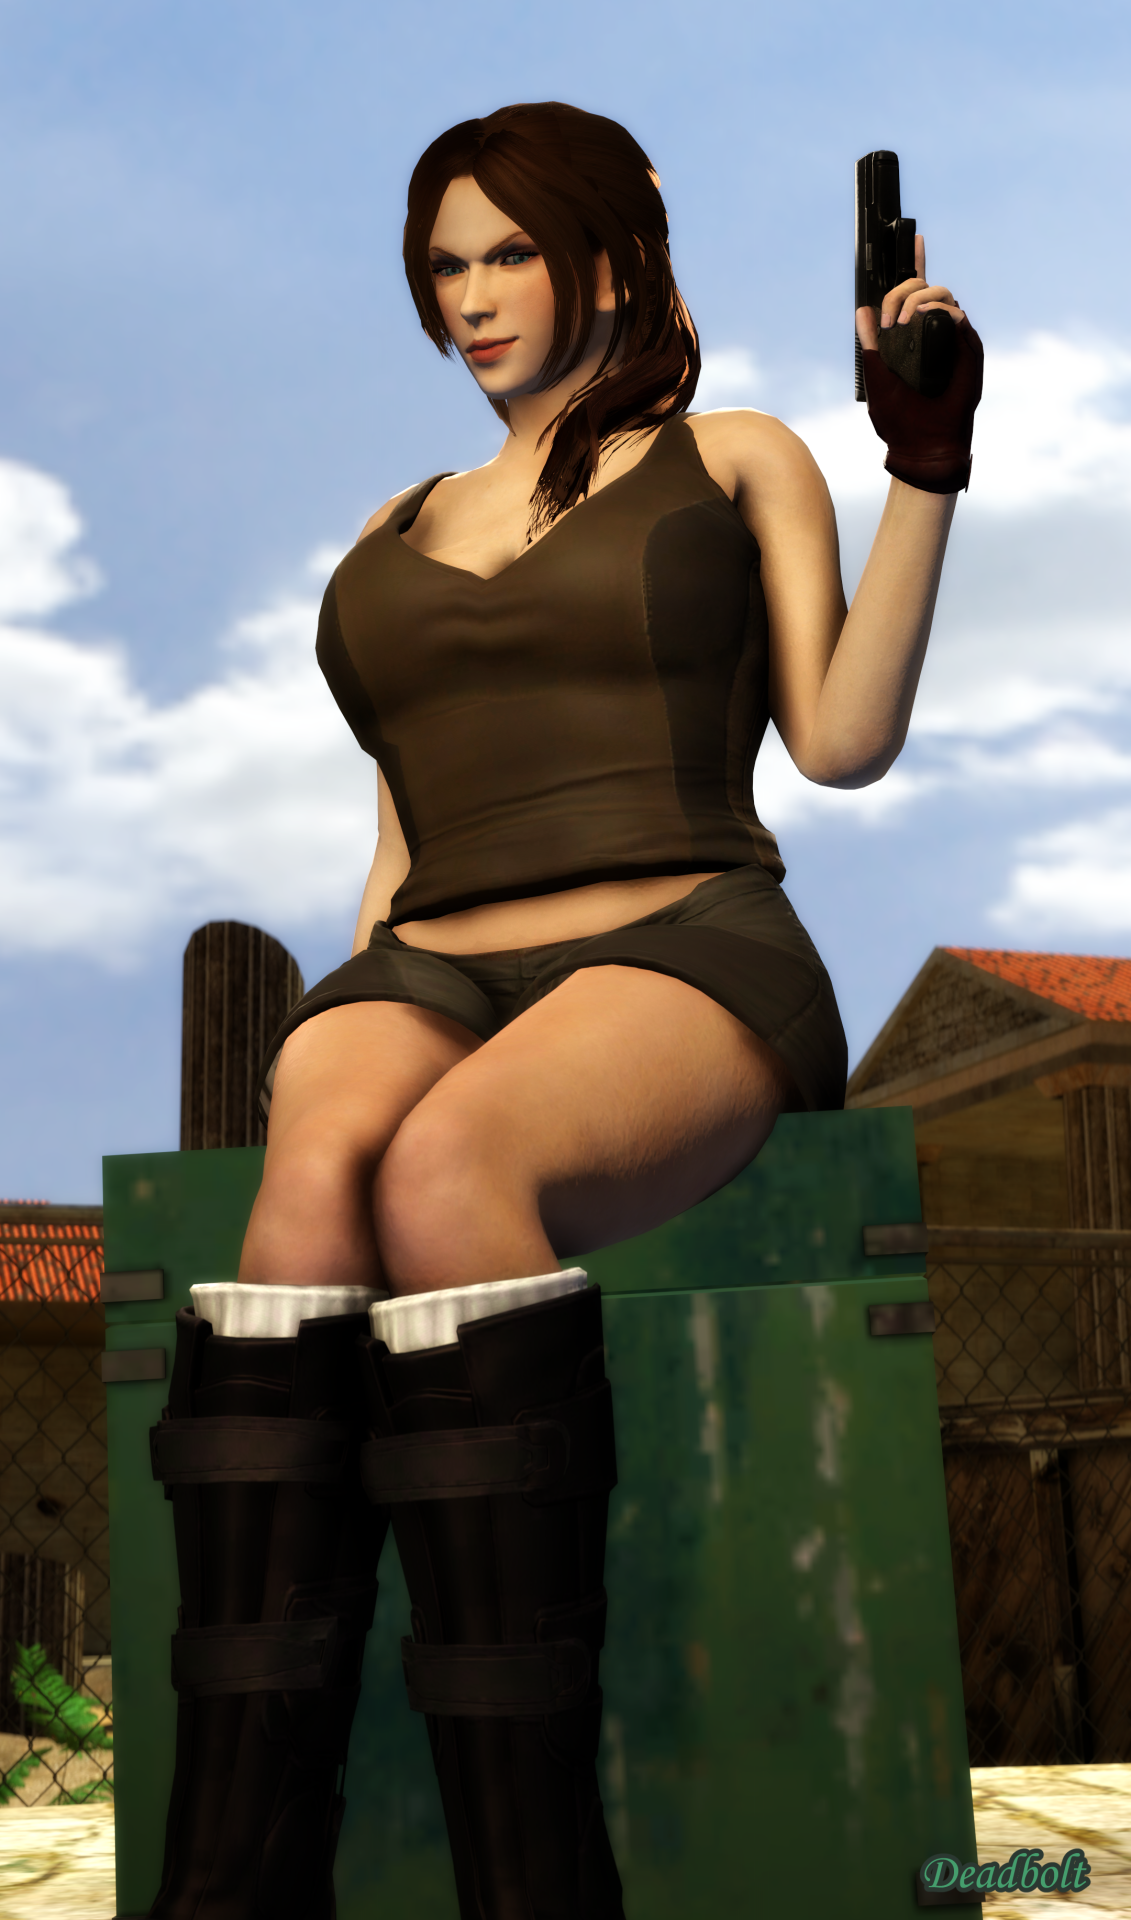 Rinox got the idea of wanting to cosplay as Lara Croft from Tomb Raider Underworld.